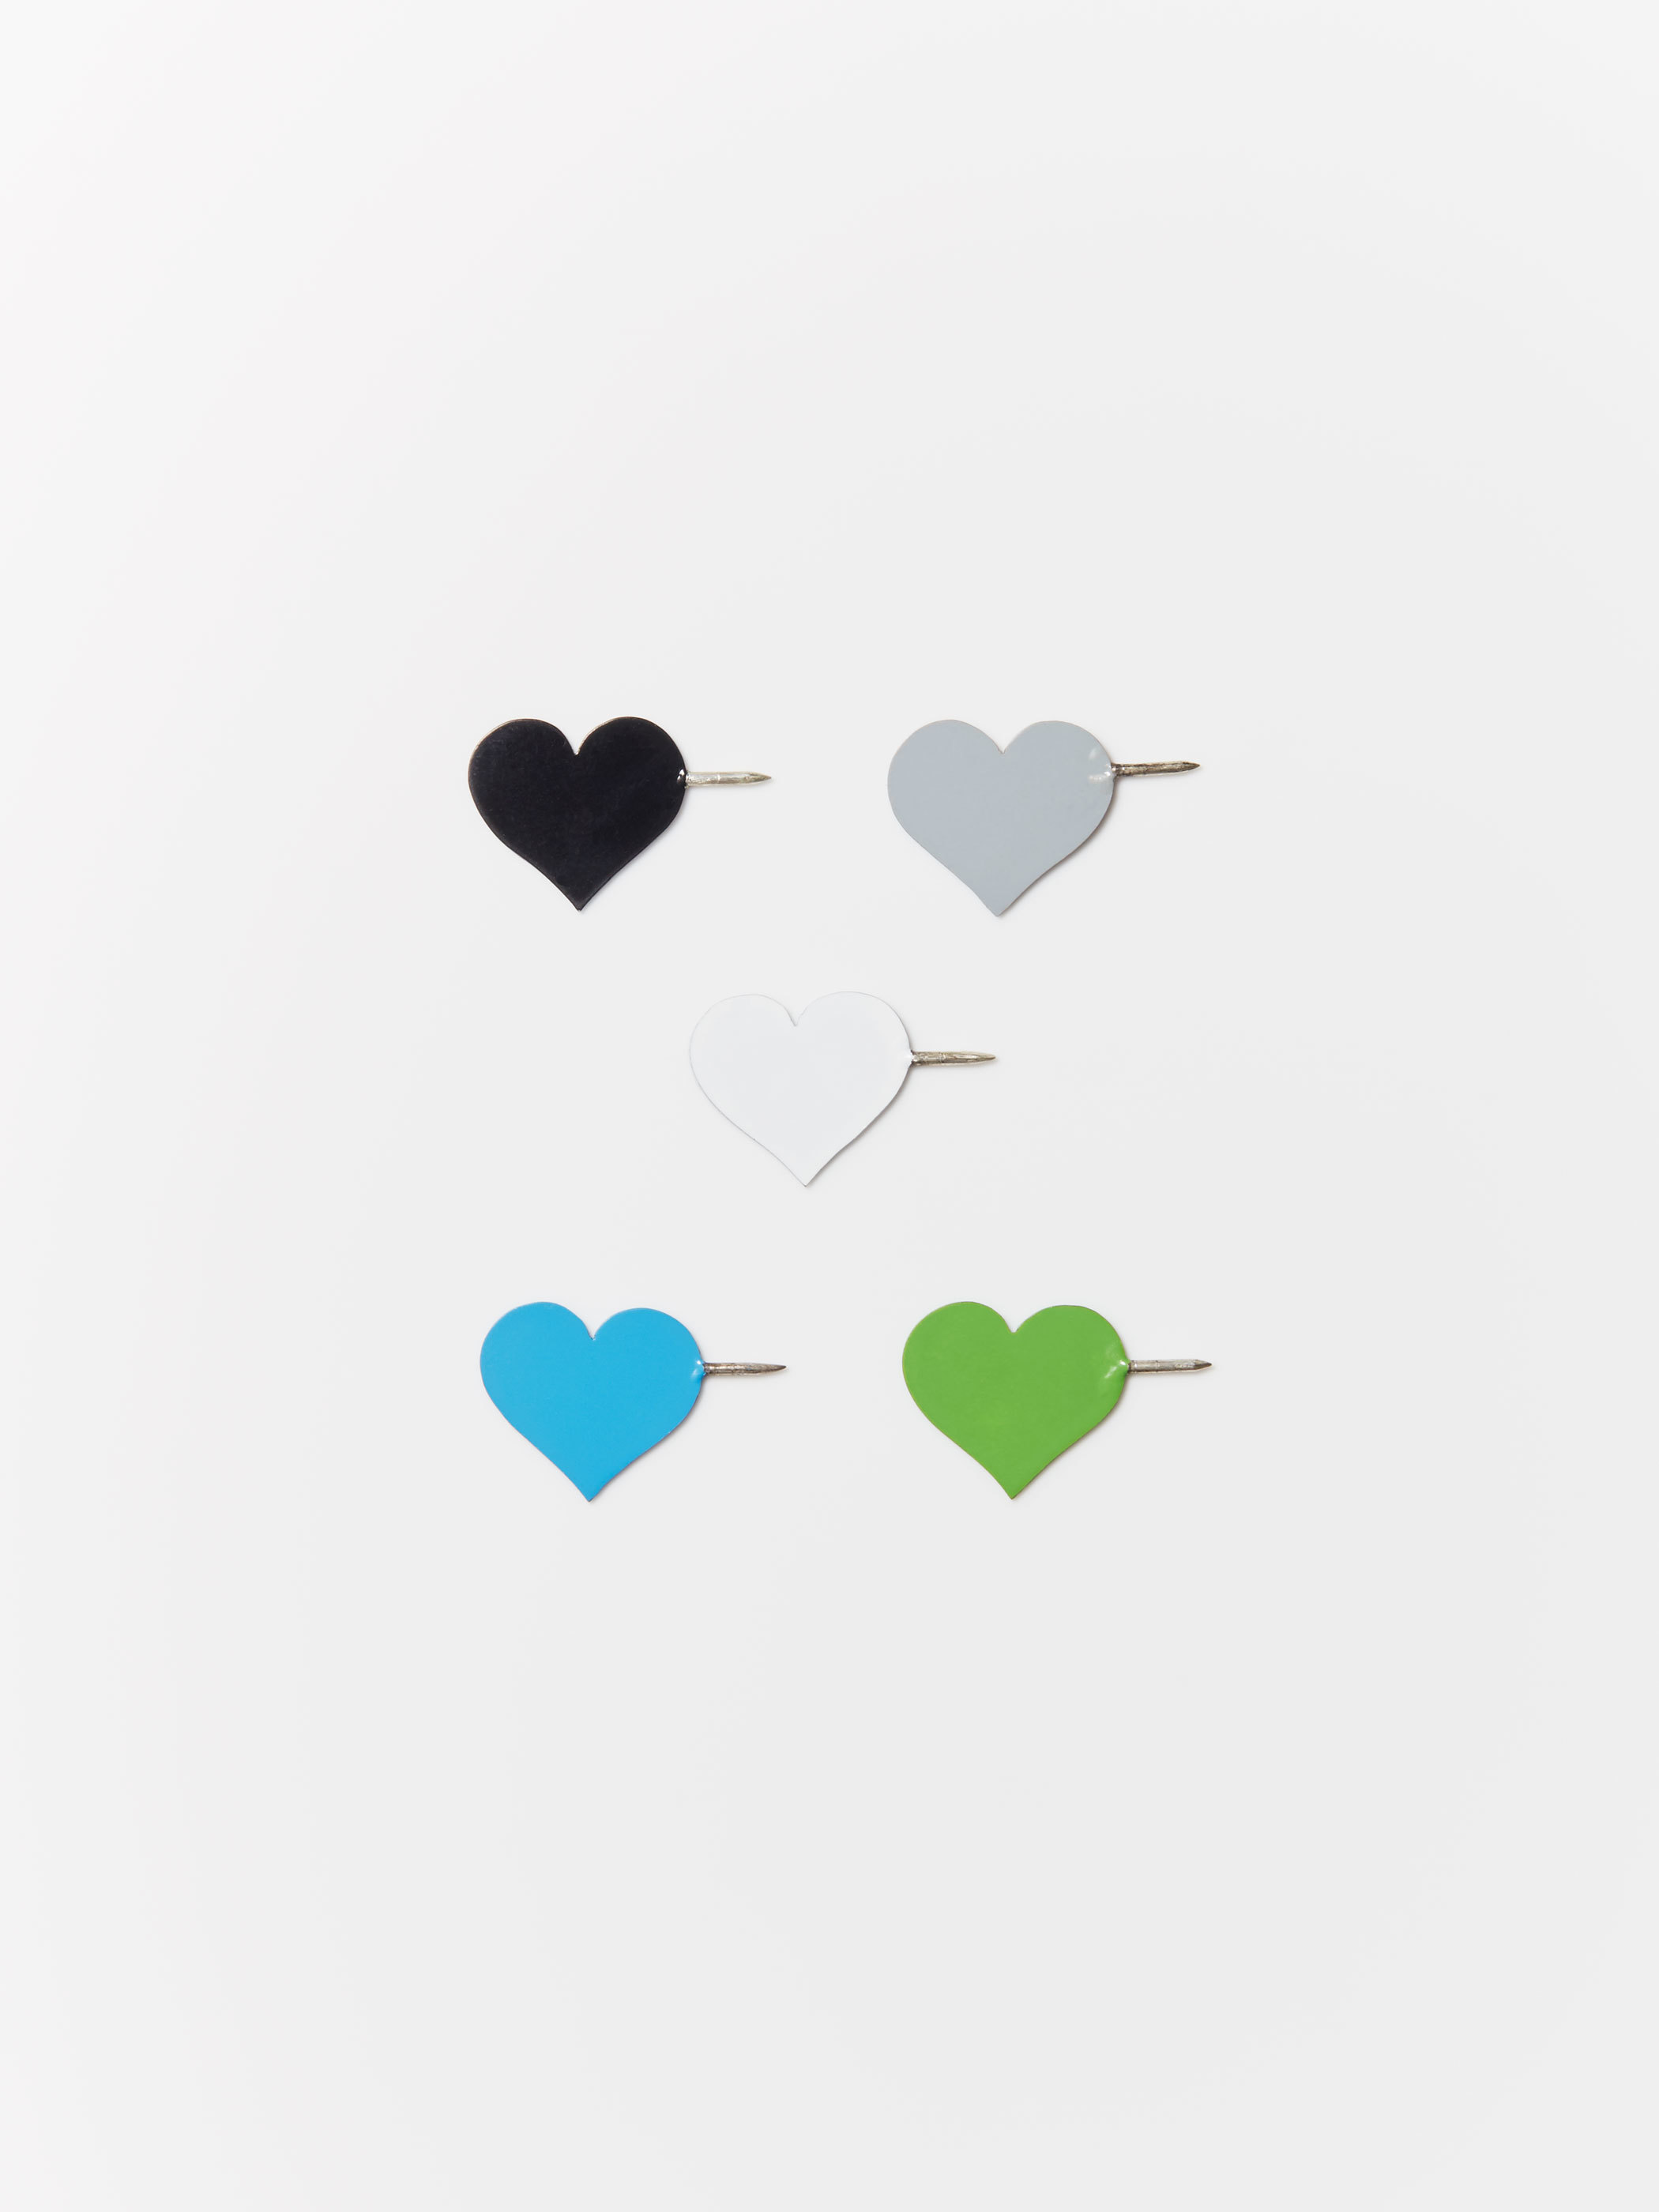 Marc Monzo / Heart pin